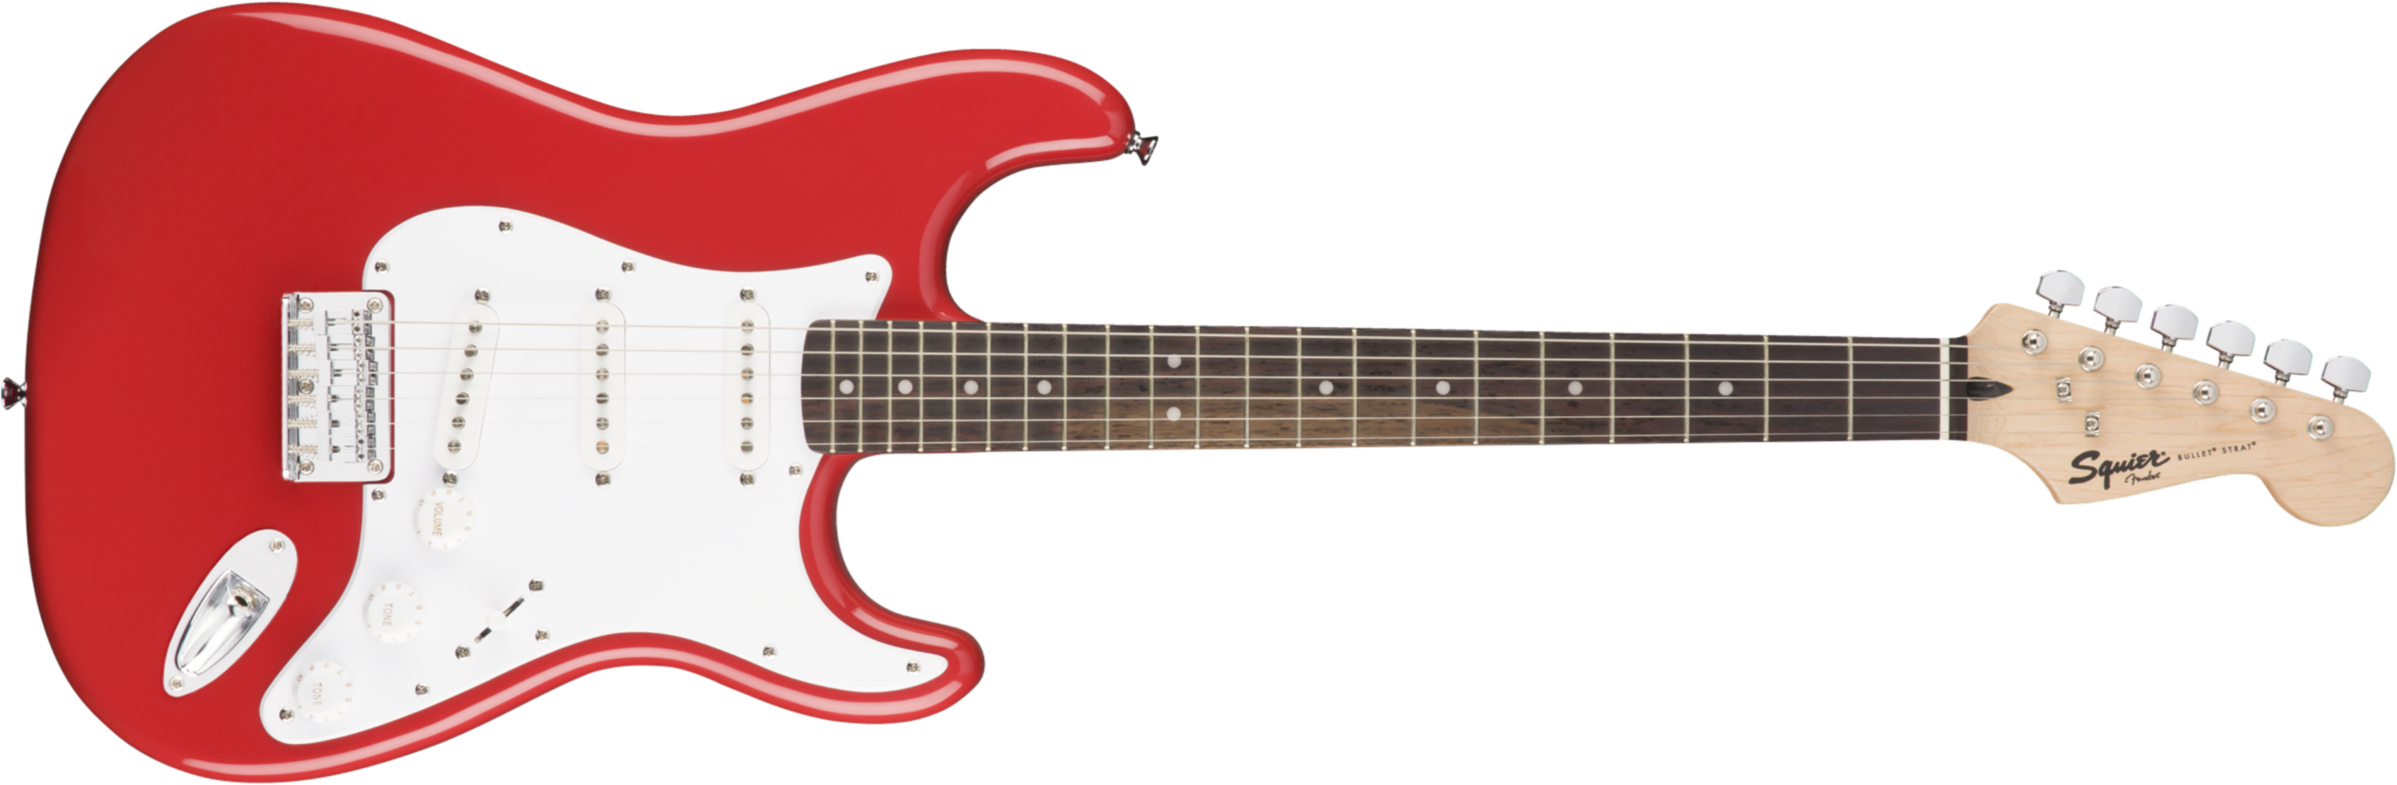 Squier Bullet Stratocaster Ht Sss (lau) - Fiesta Red - Guitarra eléctrica con forma de str. - Main picture